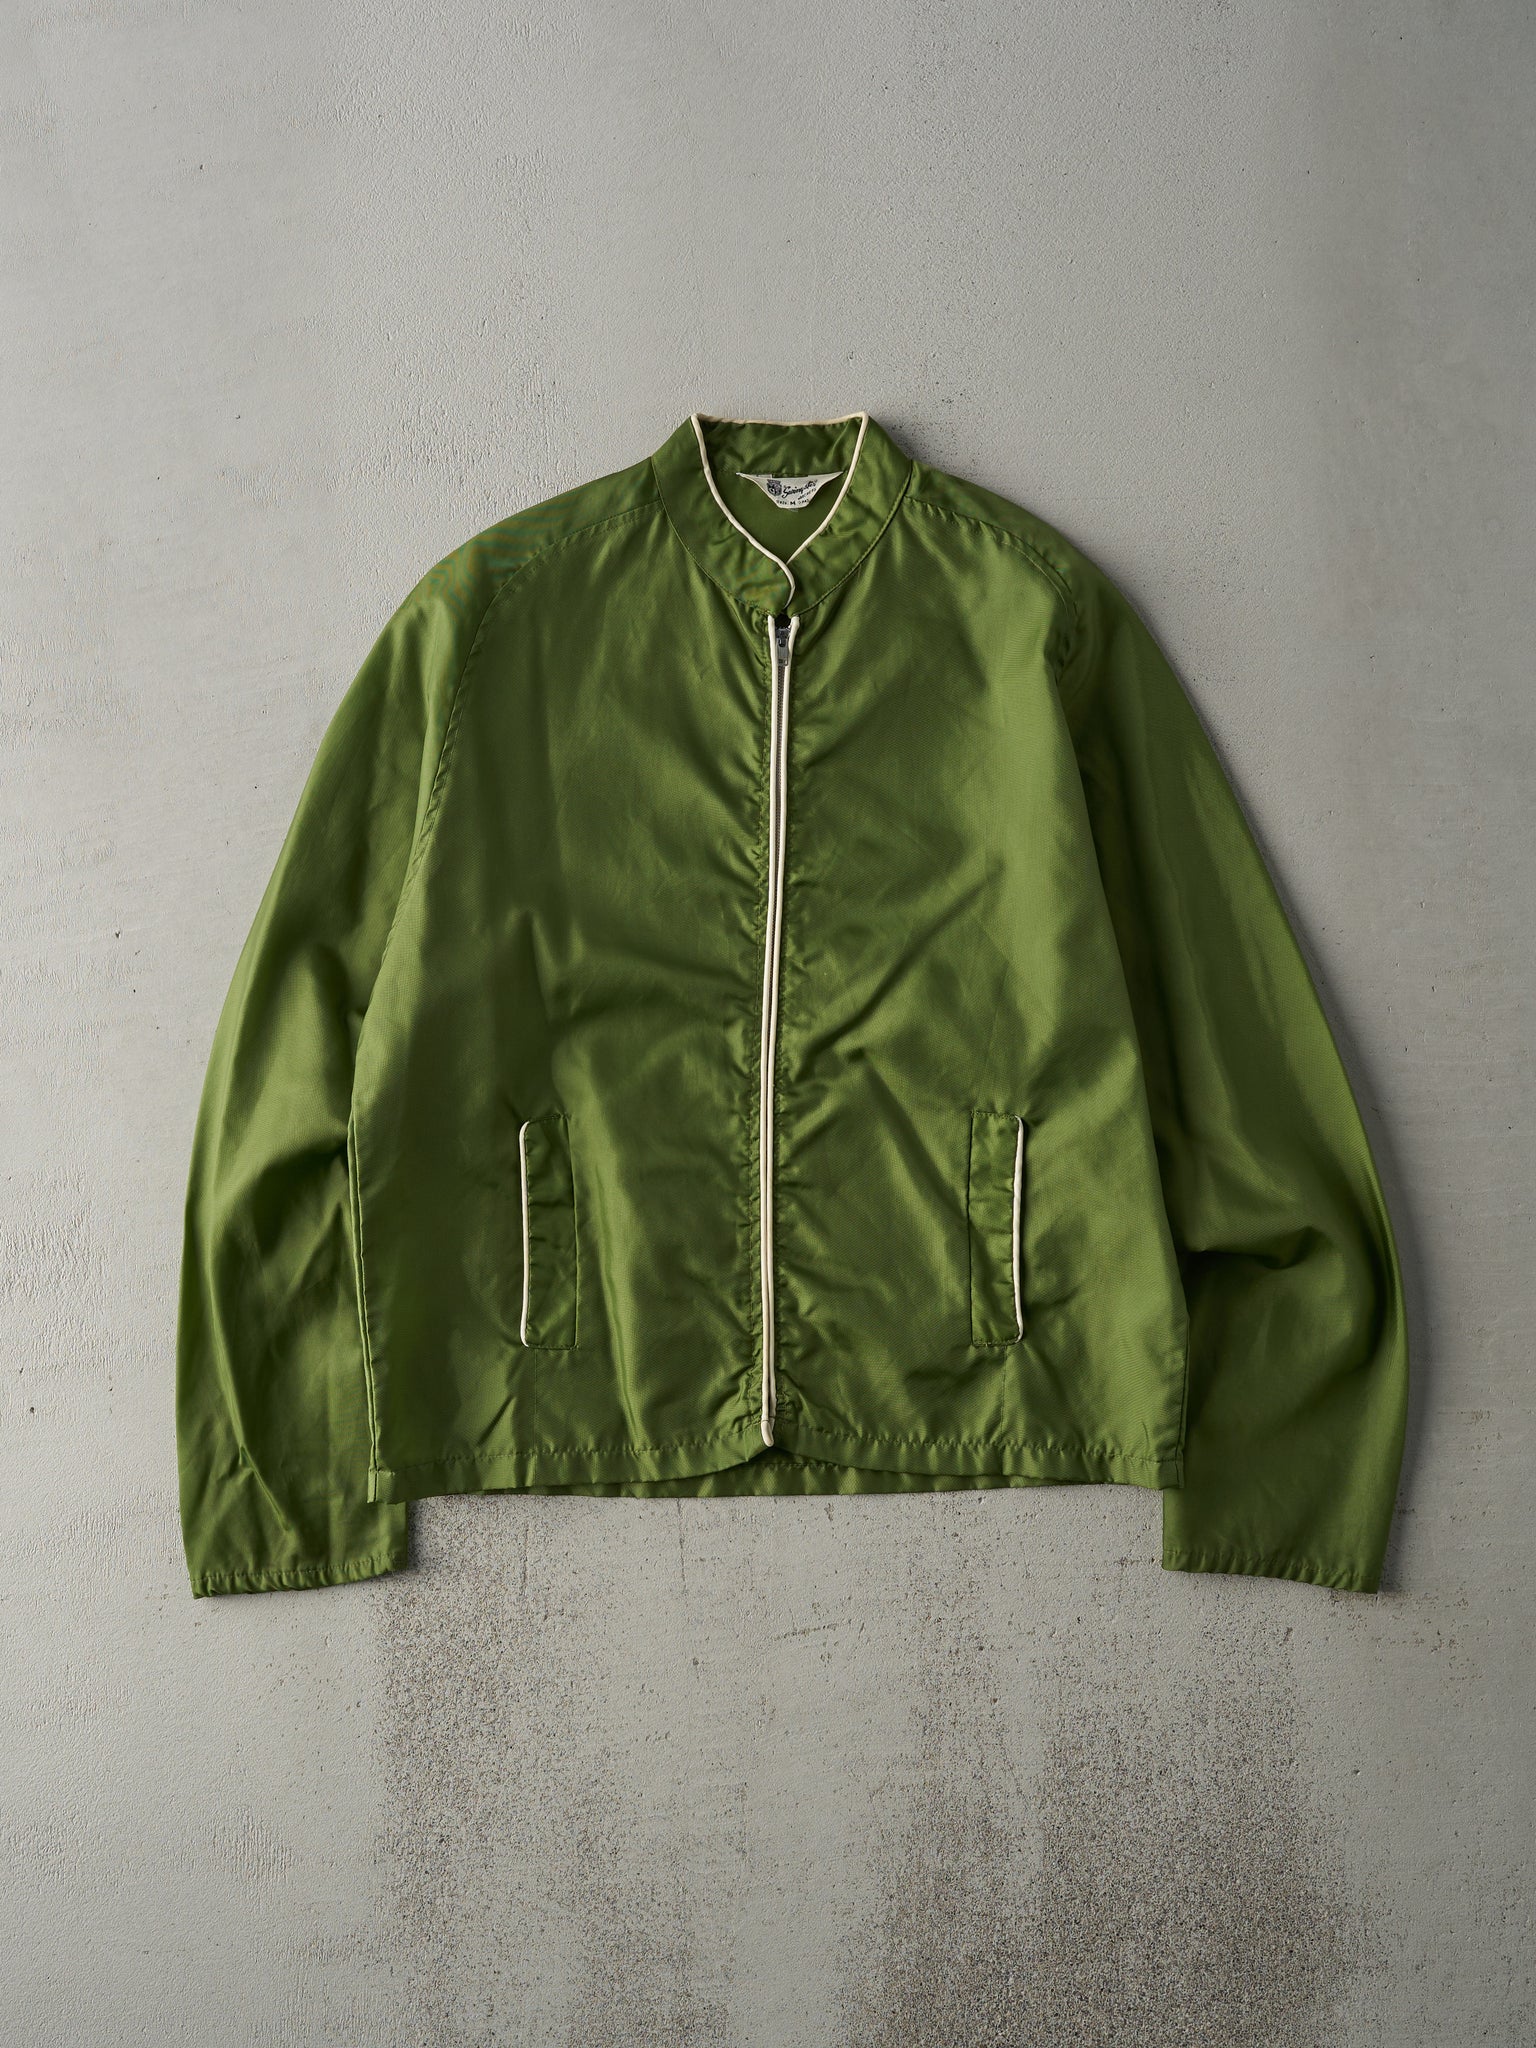 Vintage 70s Olive Green Nylon Jacket (M)